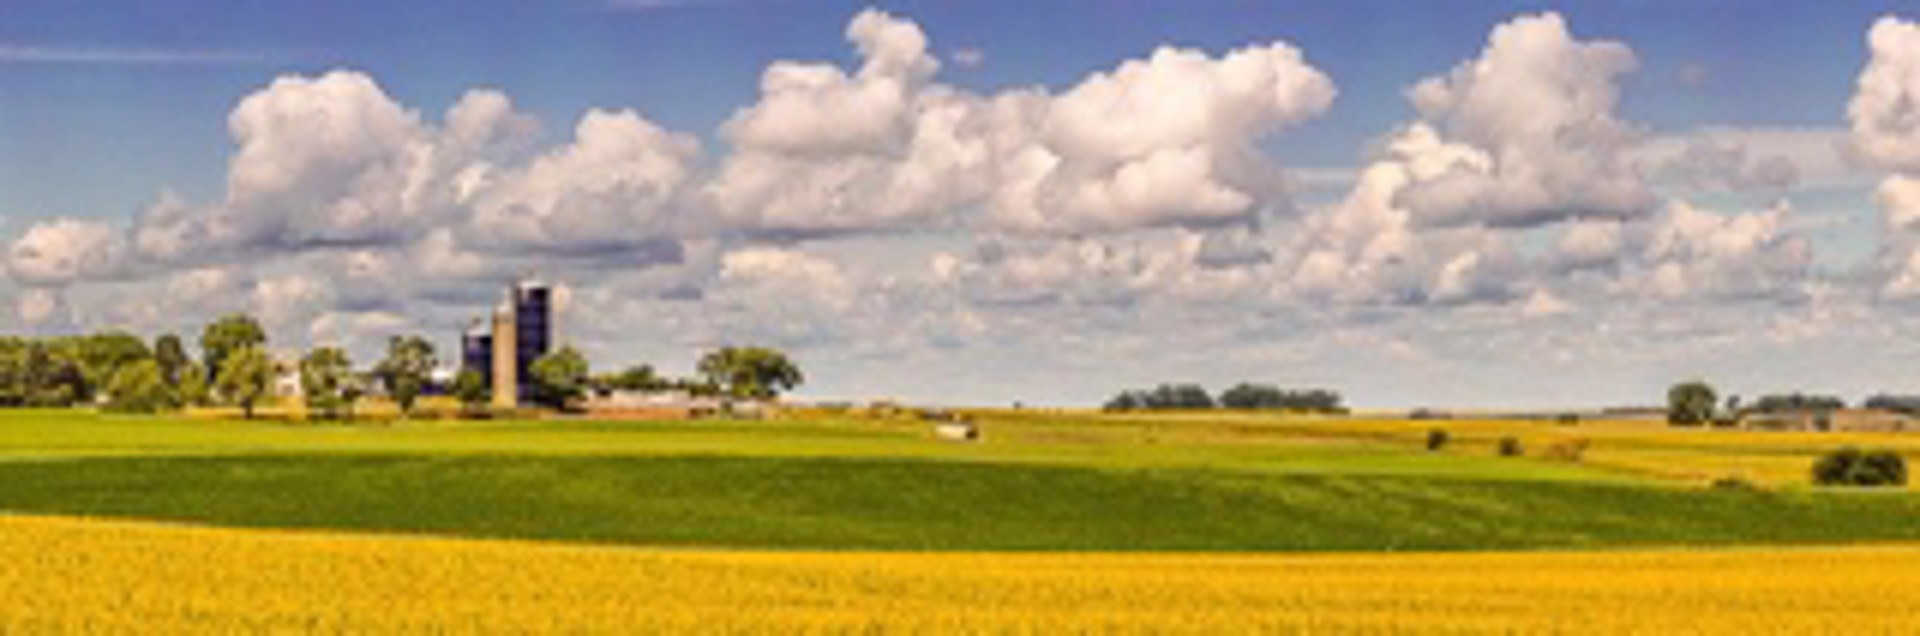 Iowa Farmscape by Justin Rogers